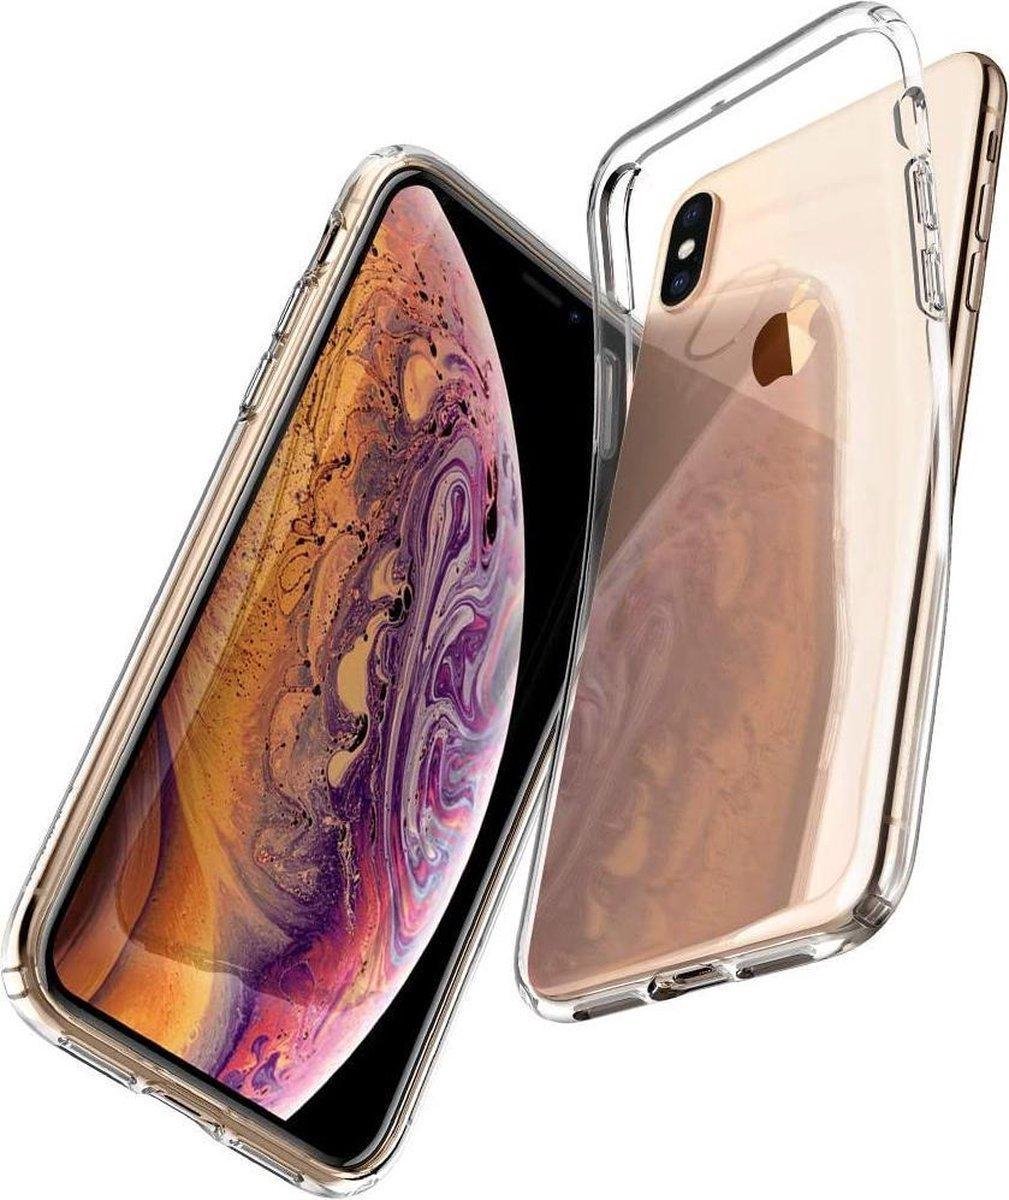 Apple iPhone Xs hoesje transparant iPhone X hoesje - Flexibel Jelly cover iPhone X(s) hoesje met gratis telefoonhouder - Transparant